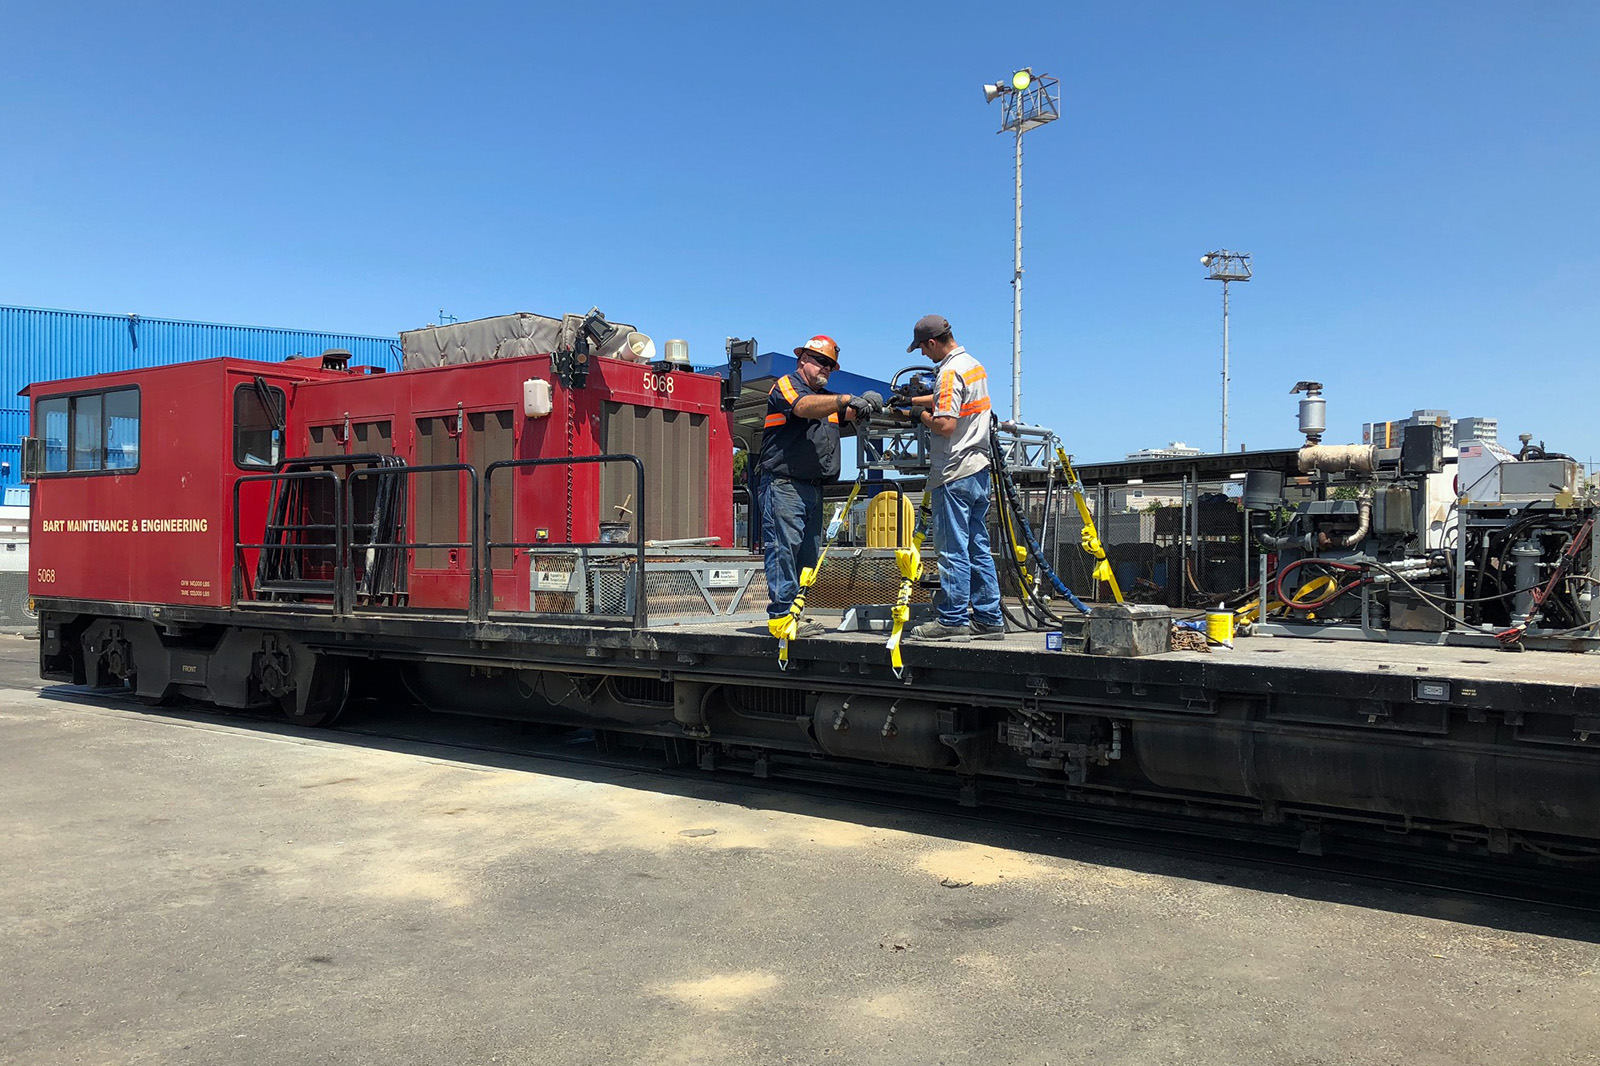 Loading drilling equipment onto railcar, BART Caldecott rail tunnel, Oakland, California